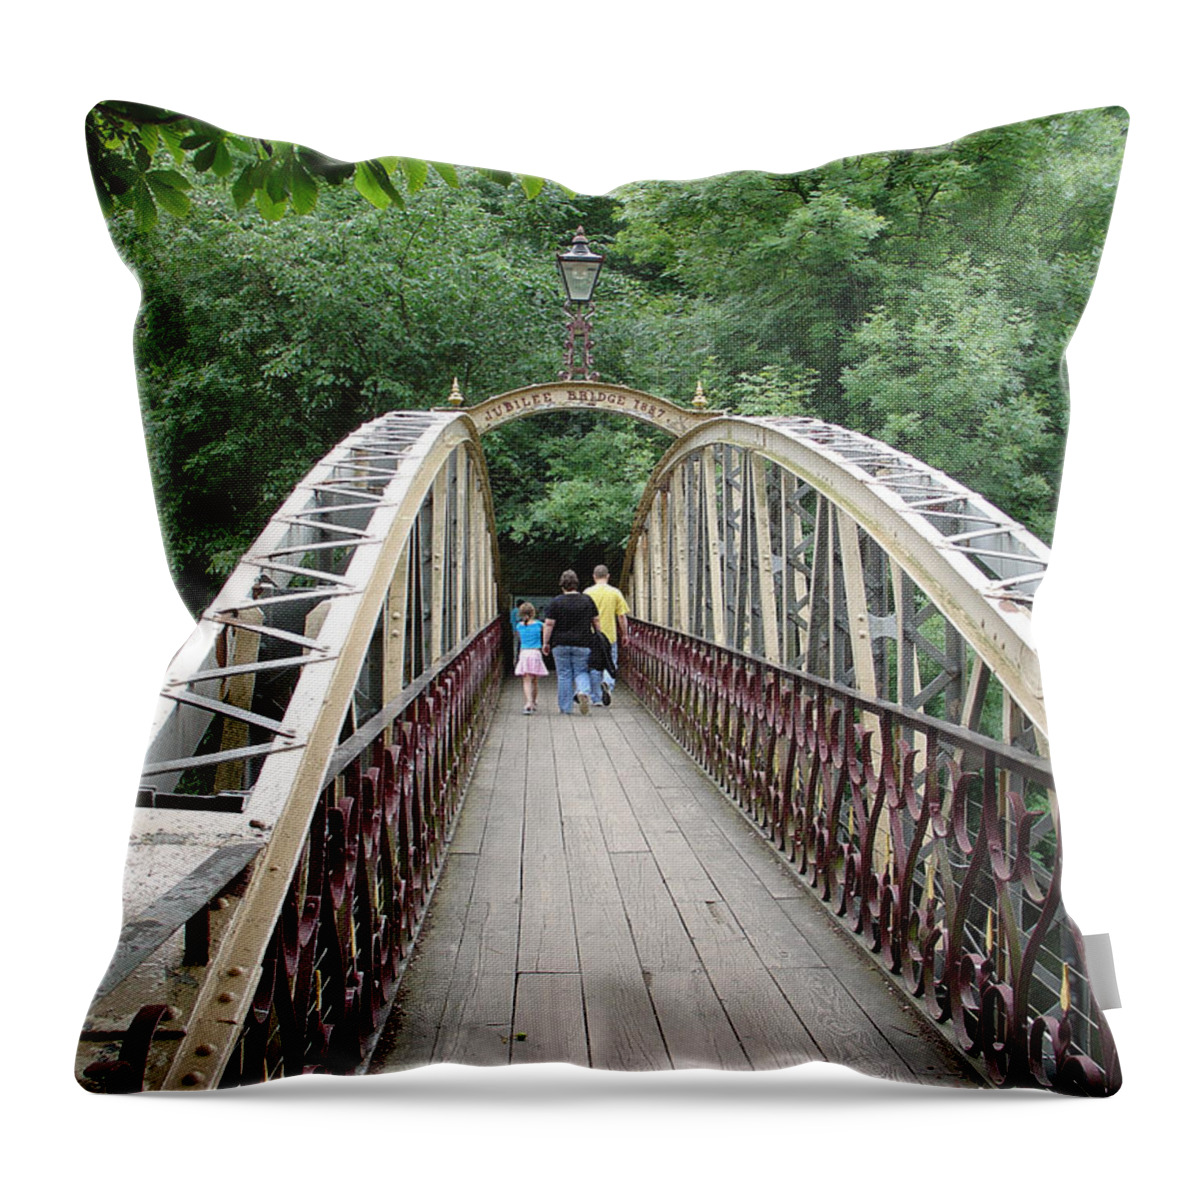 Jubilee Bridge Throw Pillow featuring the photograph Jubilee Bridge, Matlock Bath by Rod Johnson